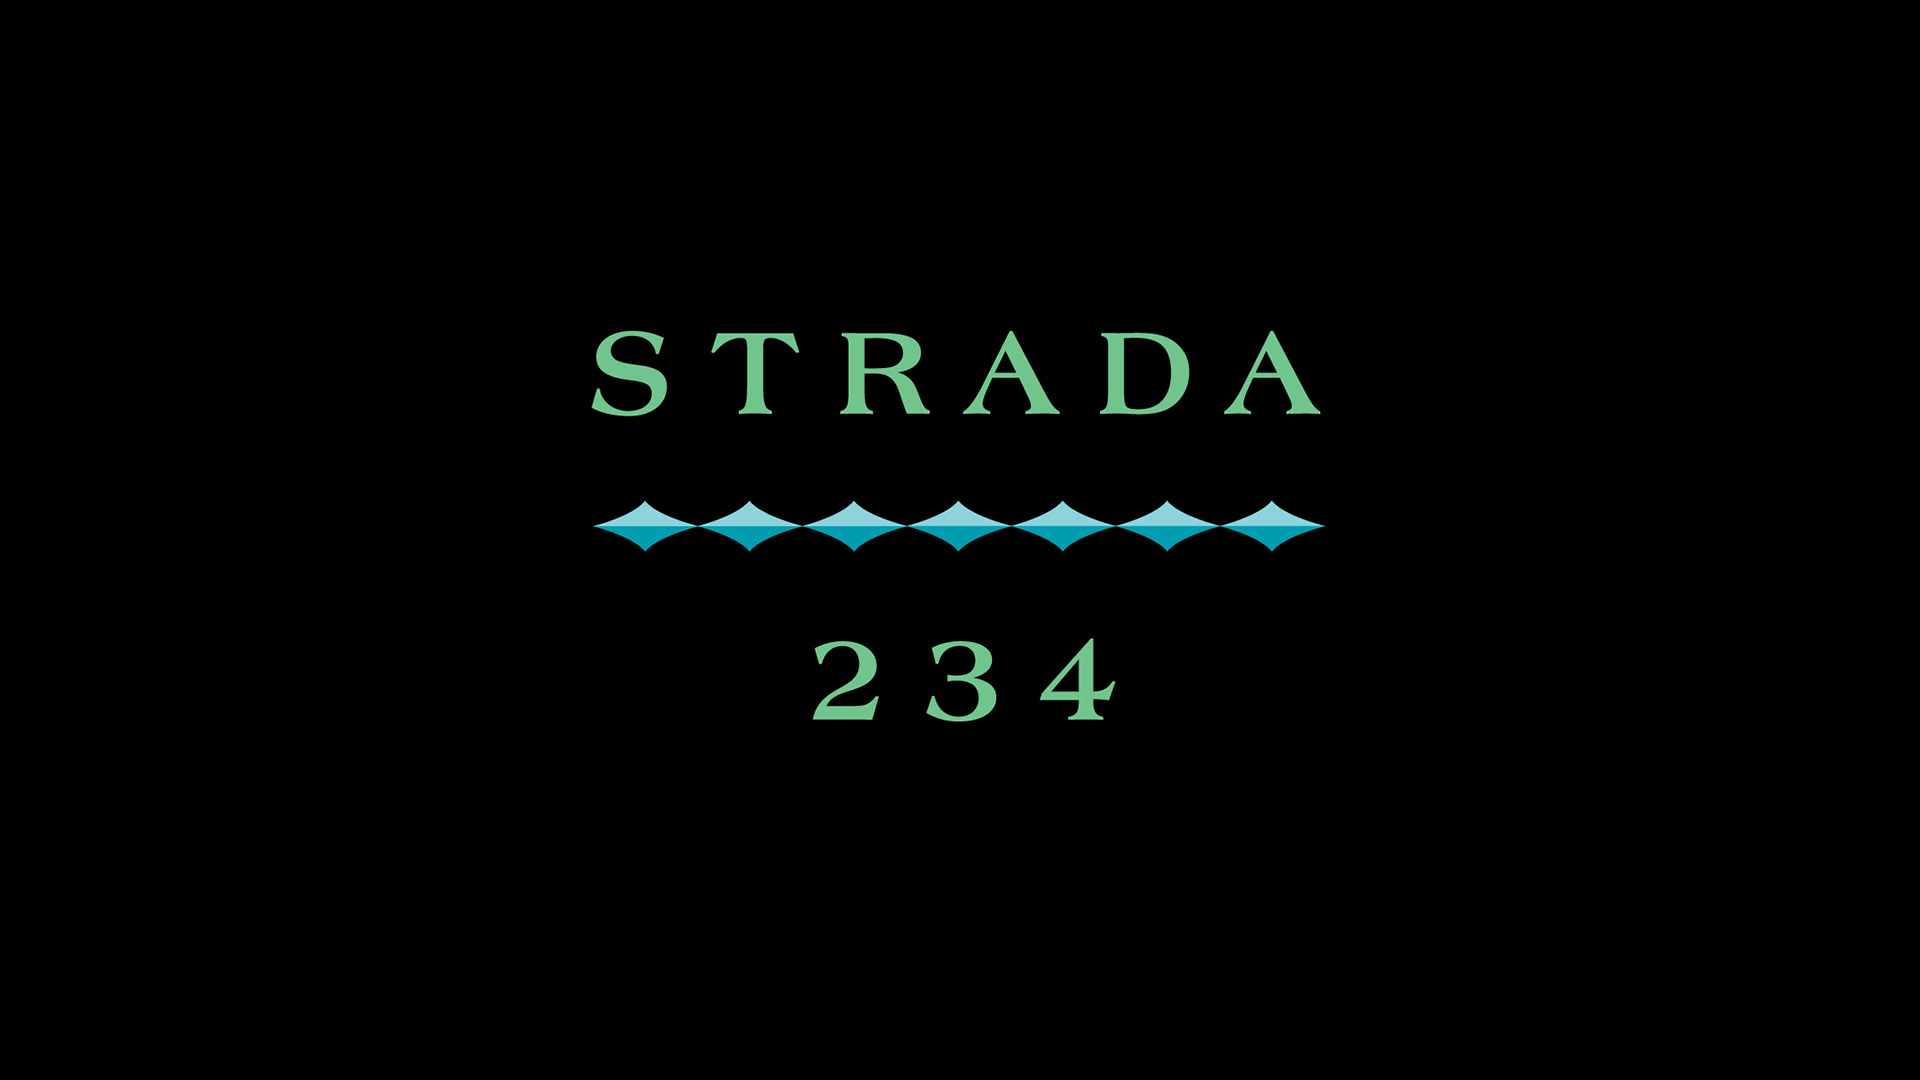 strada 234 logo on black by boston logo design studio